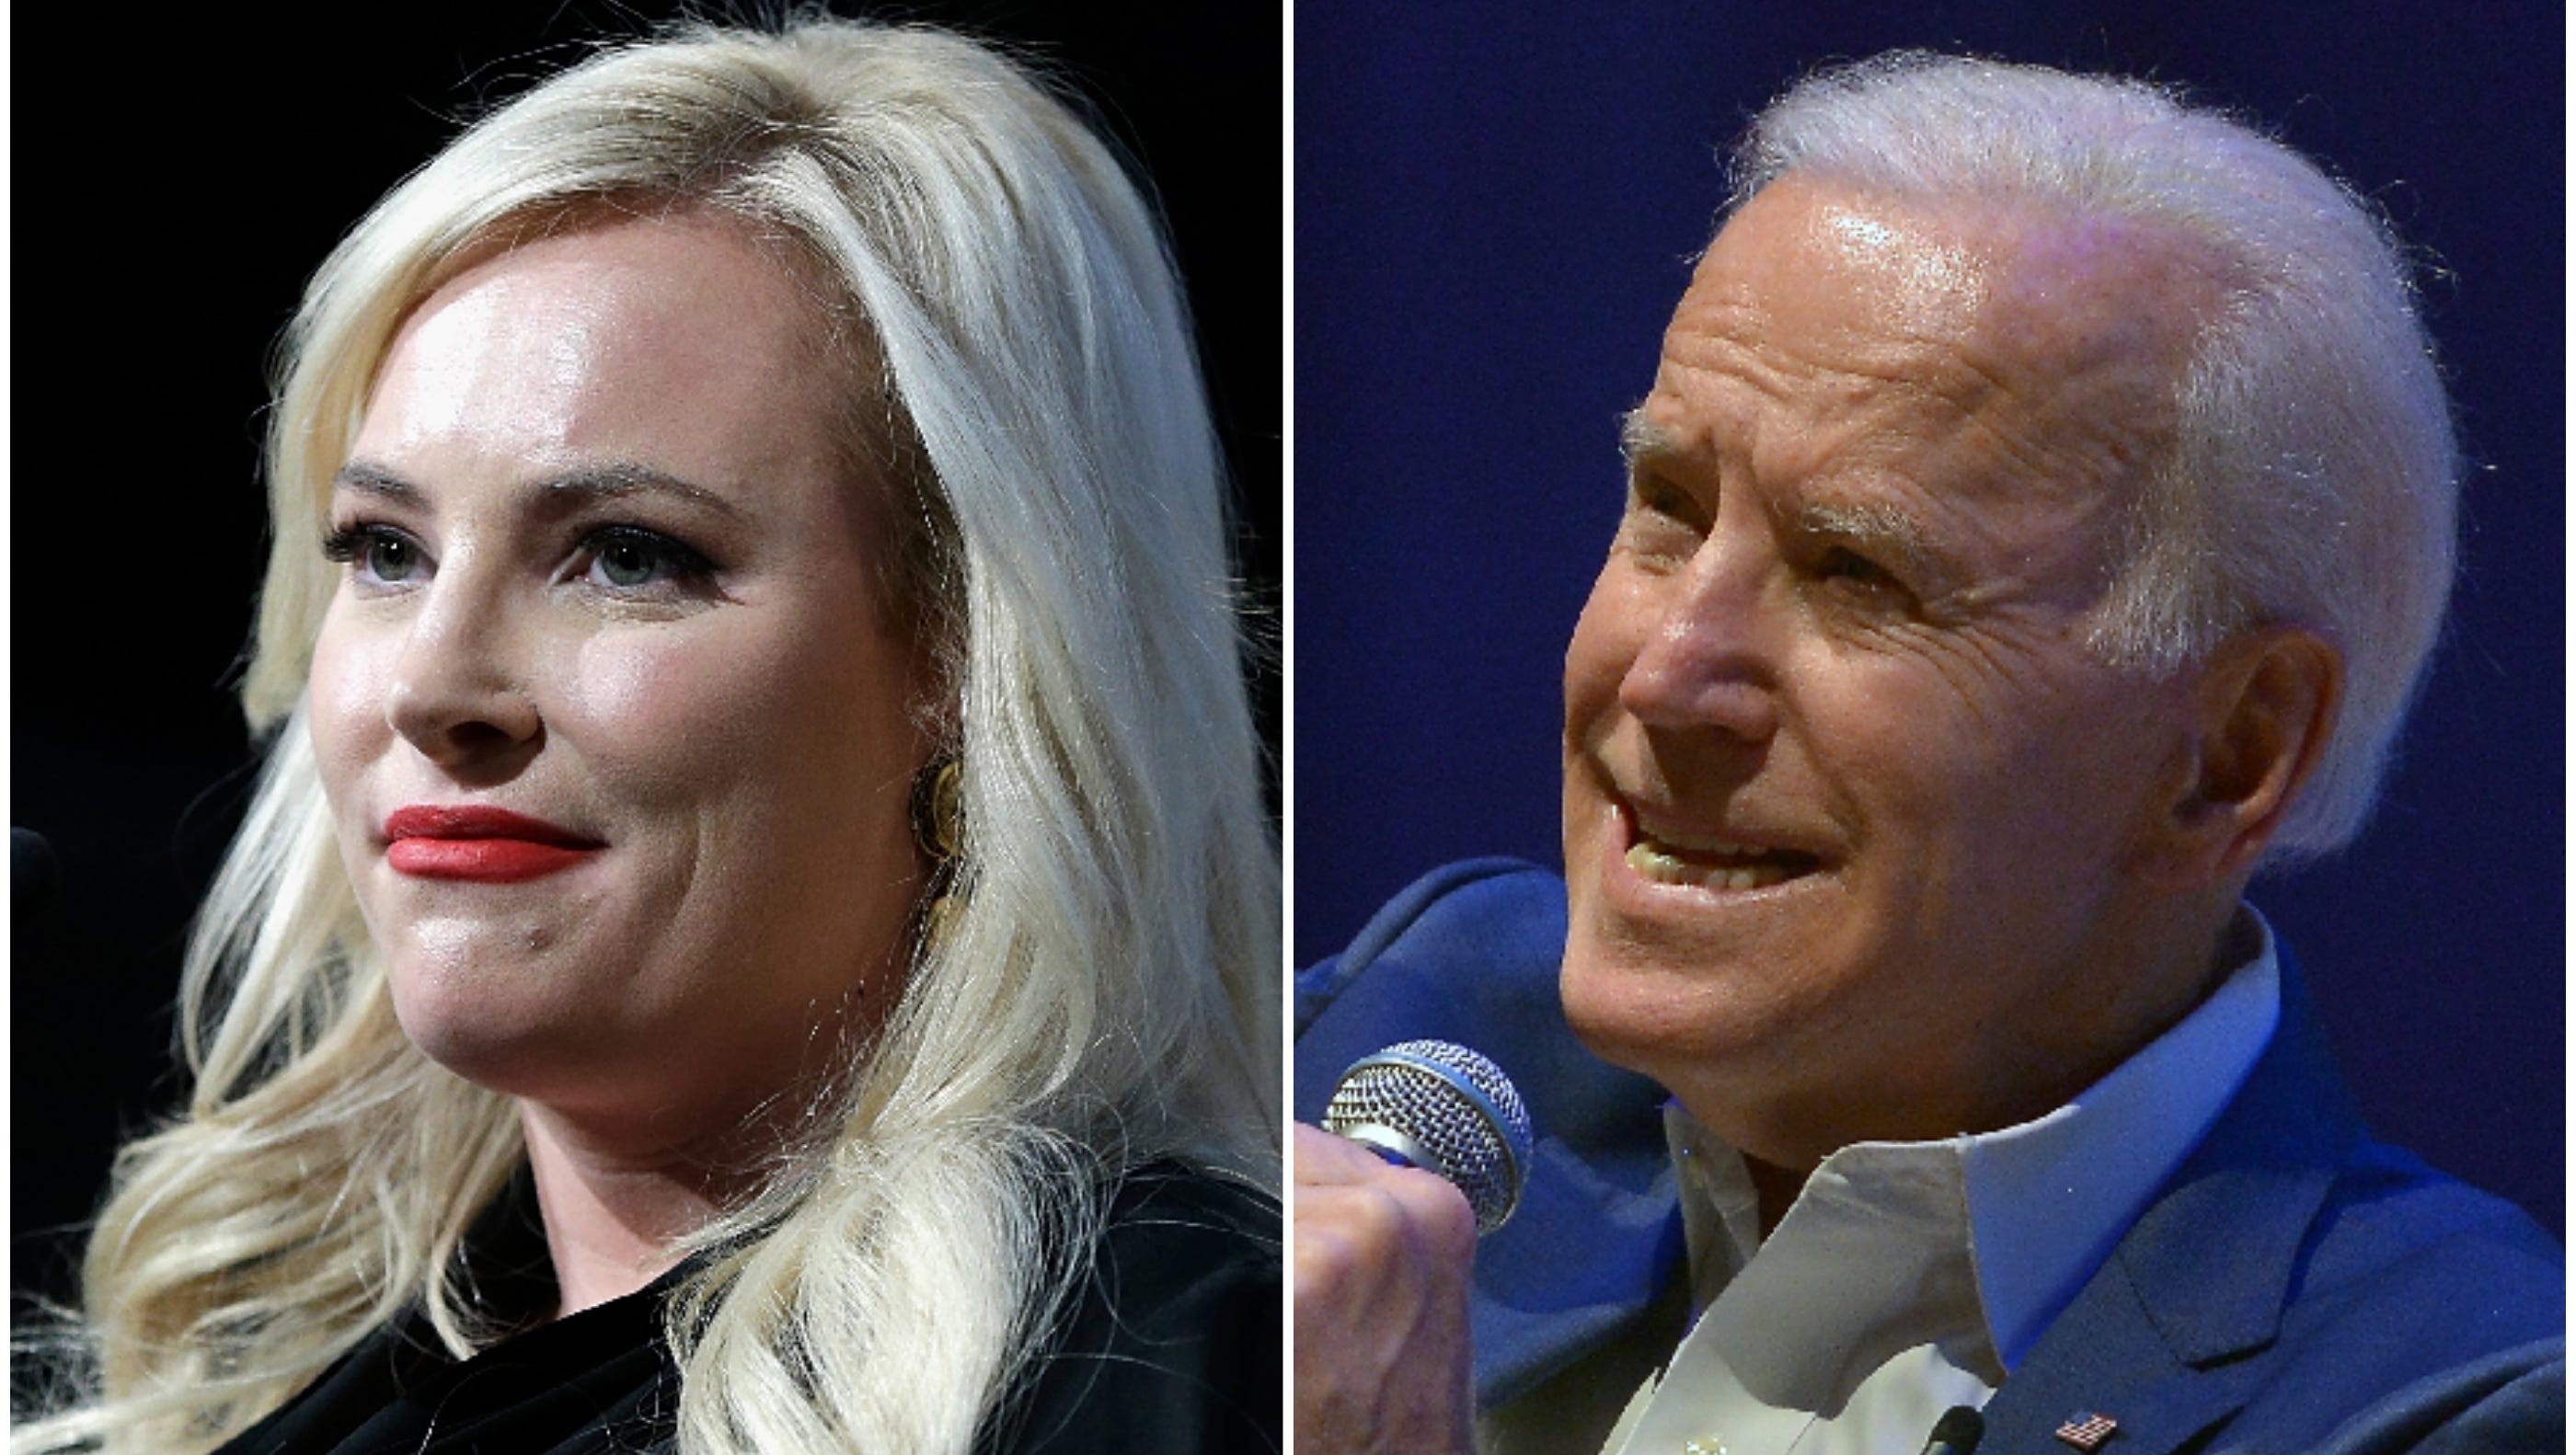 Joe Biden John McCain's daughter about her dad's 'You have hope'